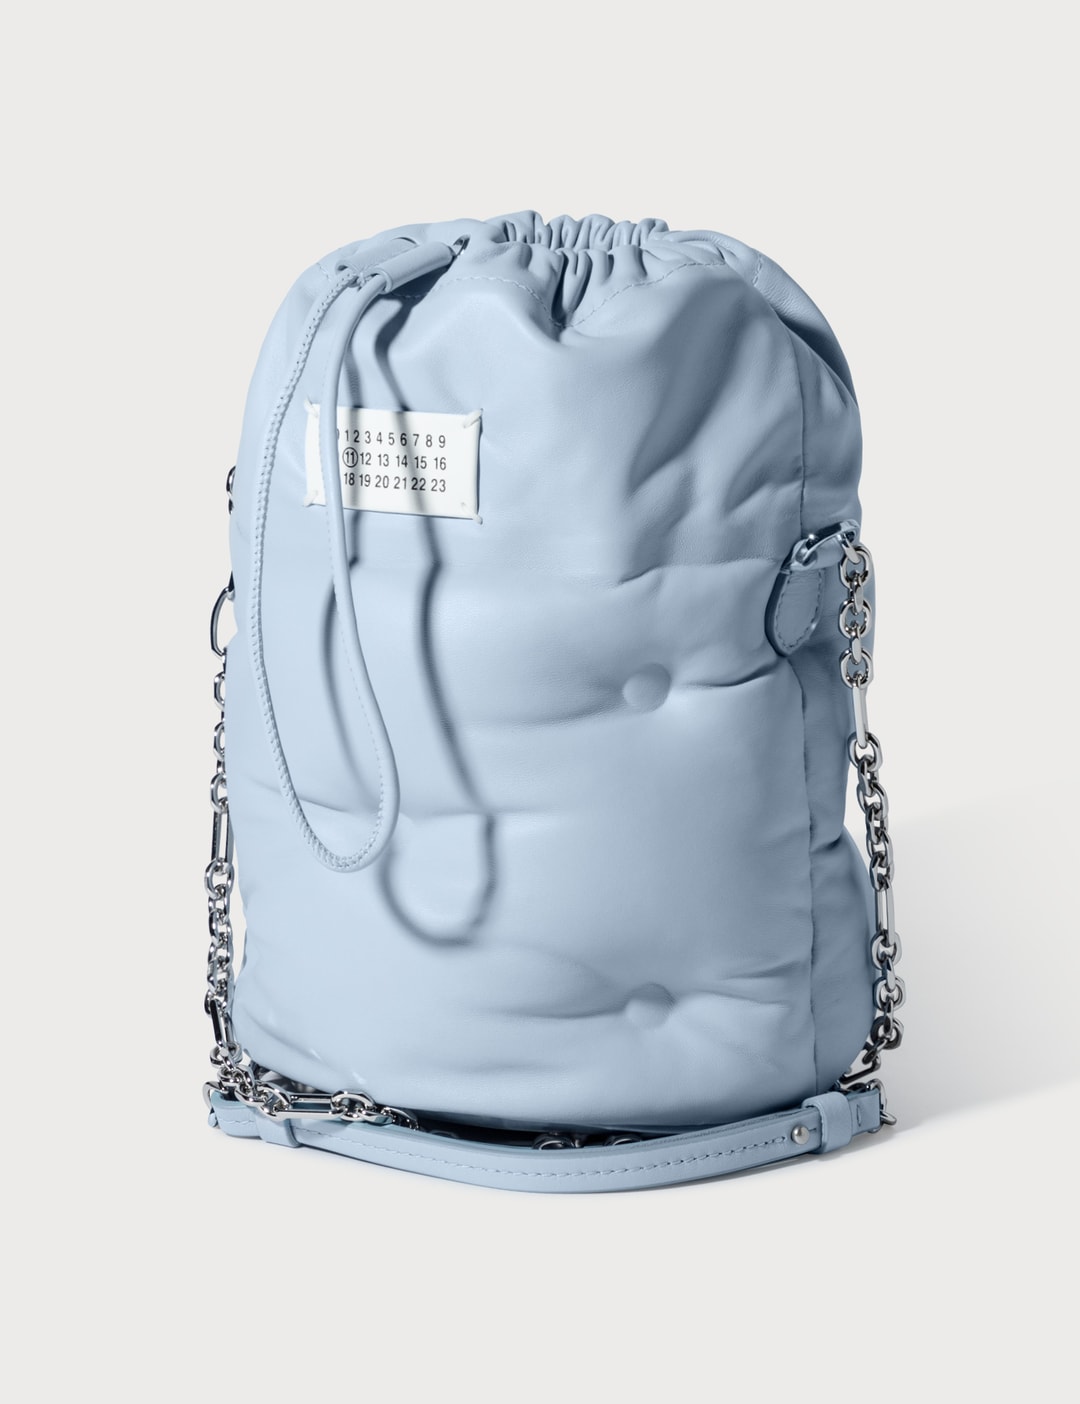 Maison Margiela - Glam Slam Mini Bucket Bag | HBX - Globally Curated ...